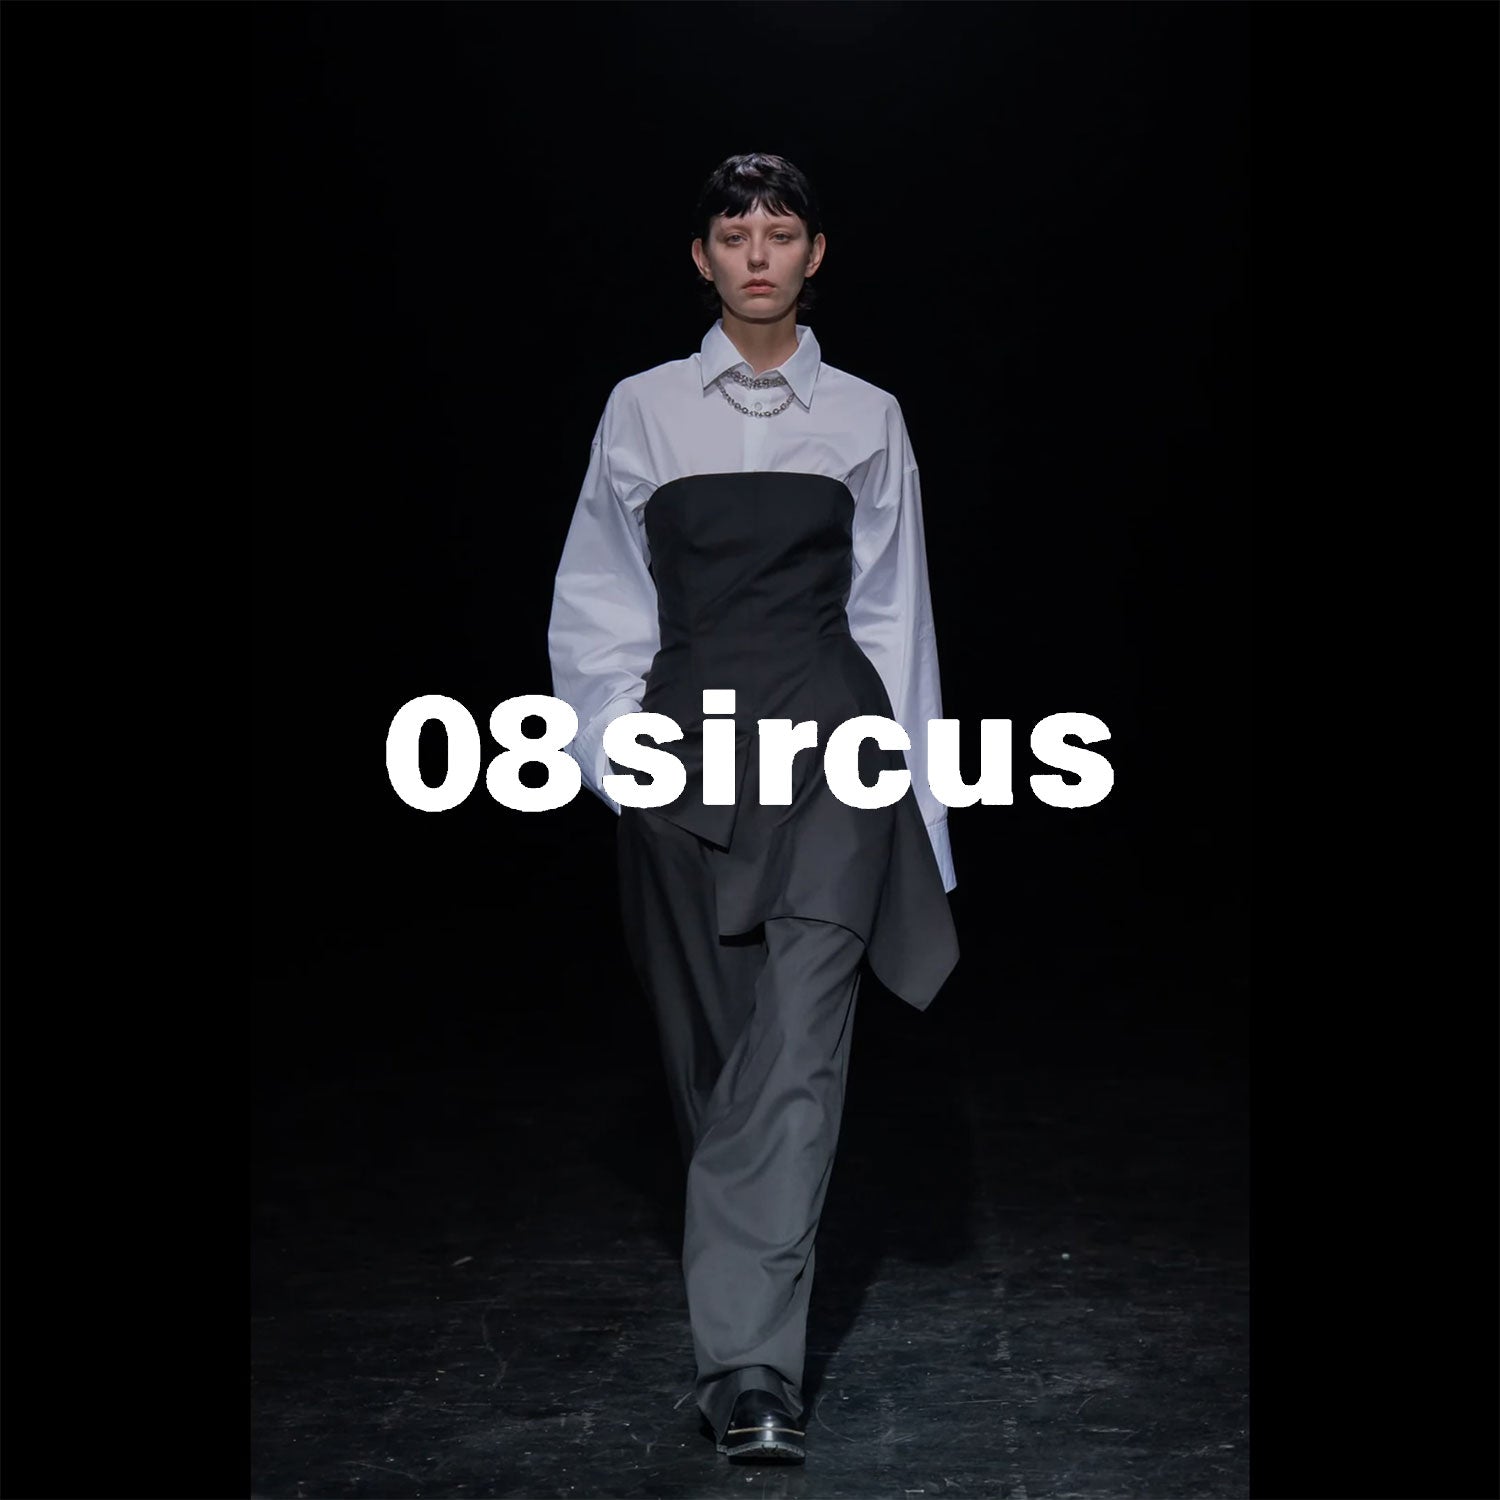 08sircus(サーカス) -Amanojak. online store